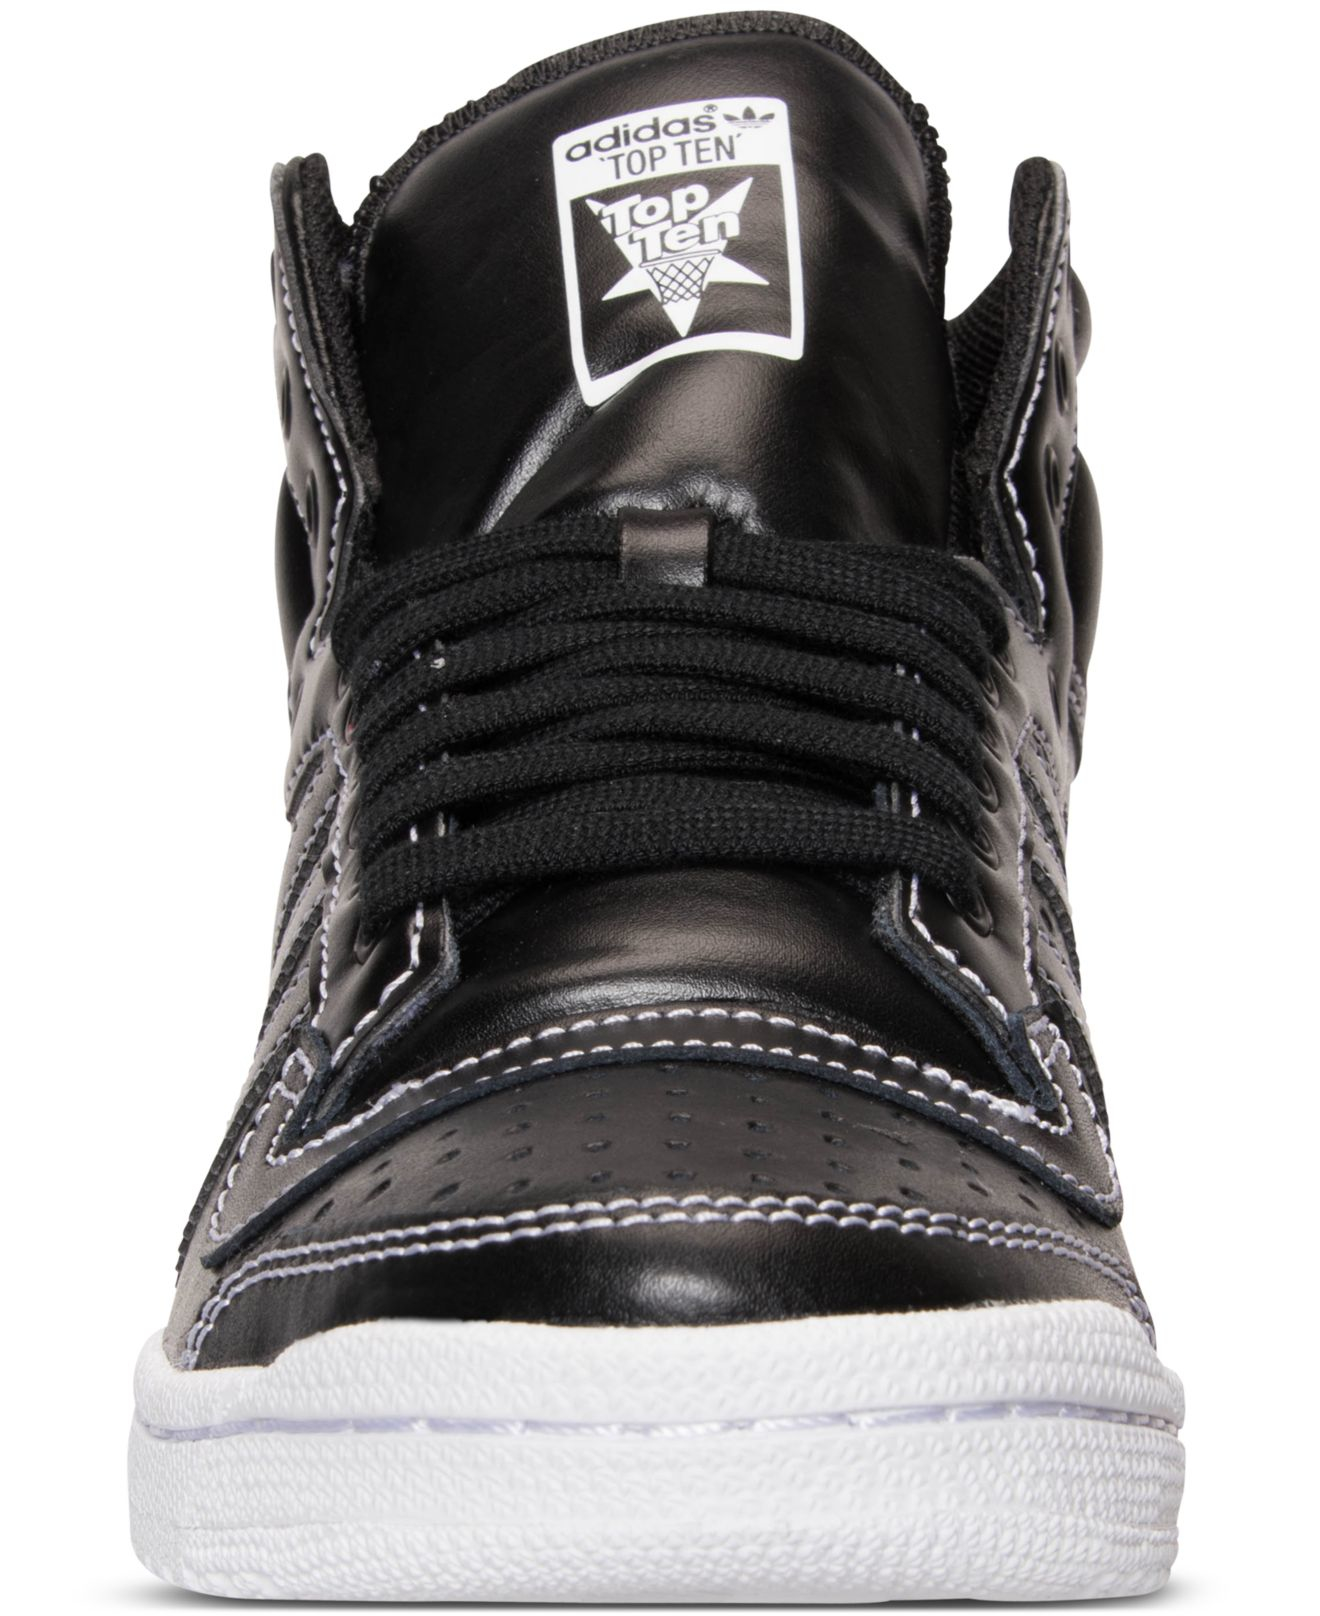 adidas Originals Leather Men's Top Ten Hi Casual Sneakers From Finish ...